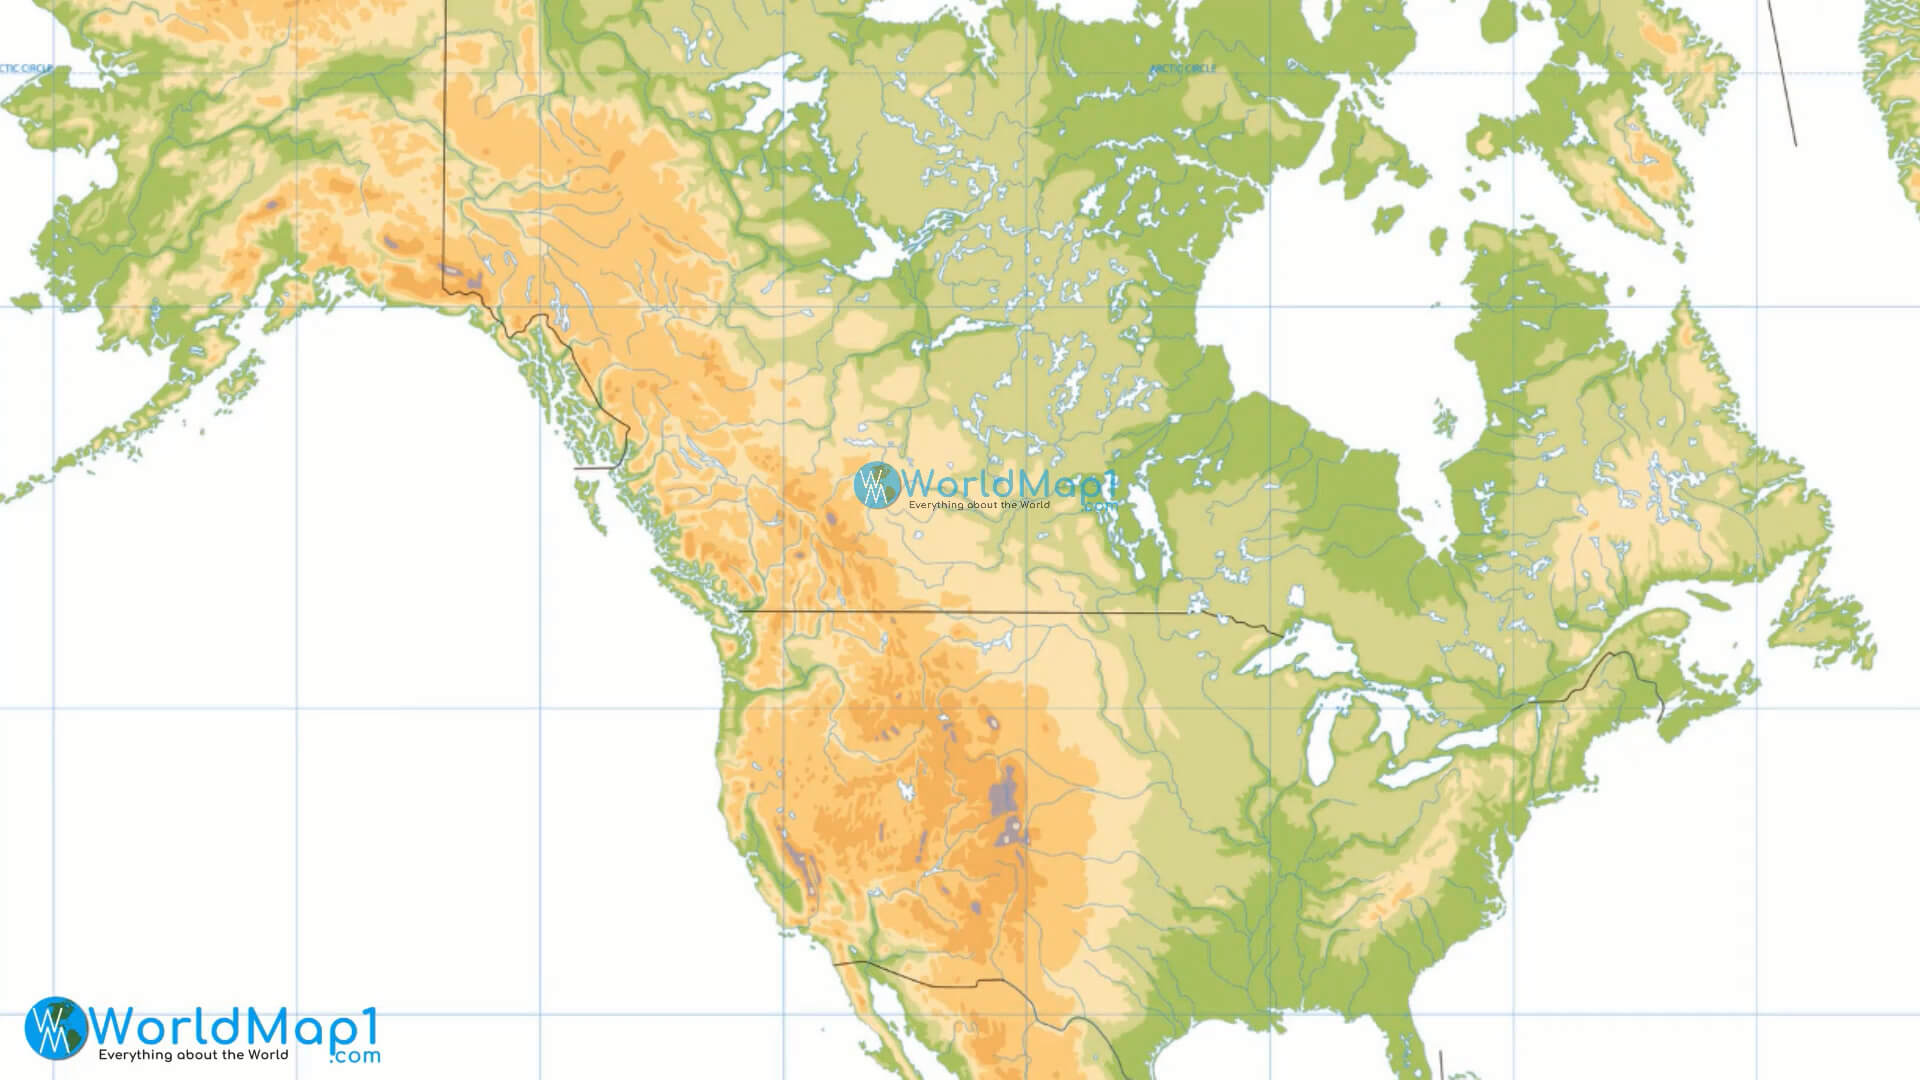 North America Satellite Map